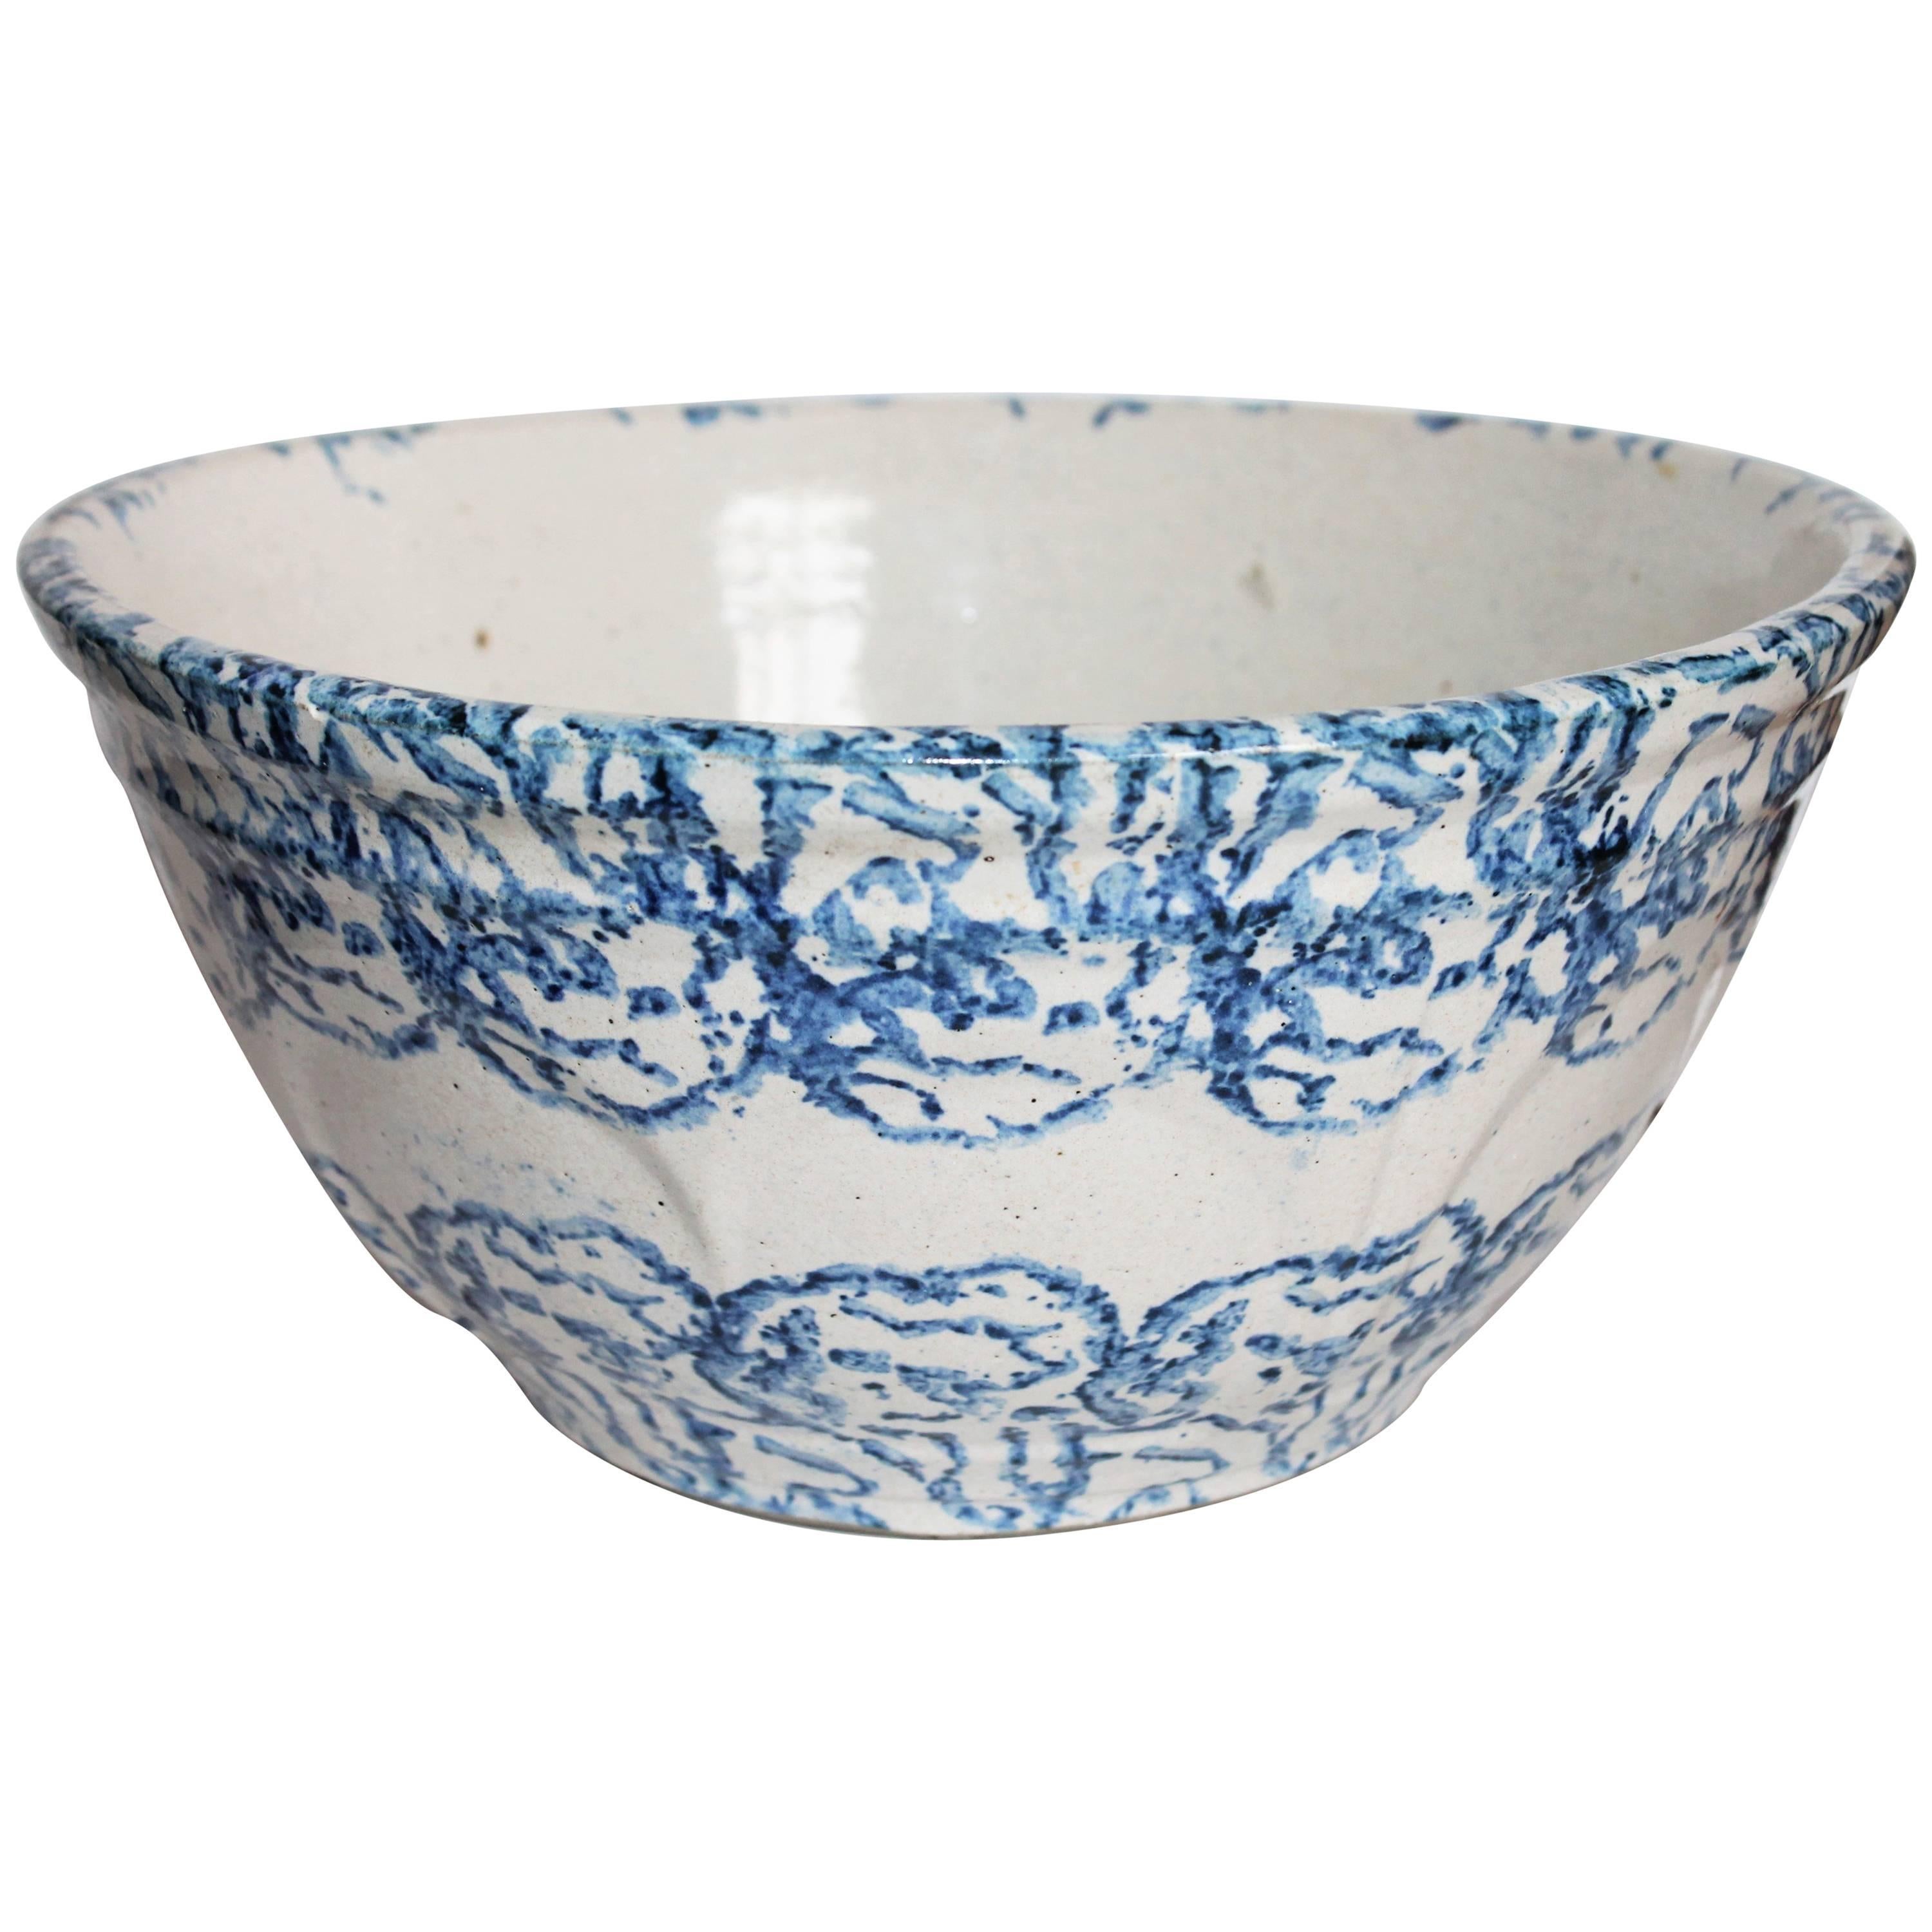 Monumental 19th Century Spongeware Pottery Mixing Bowl